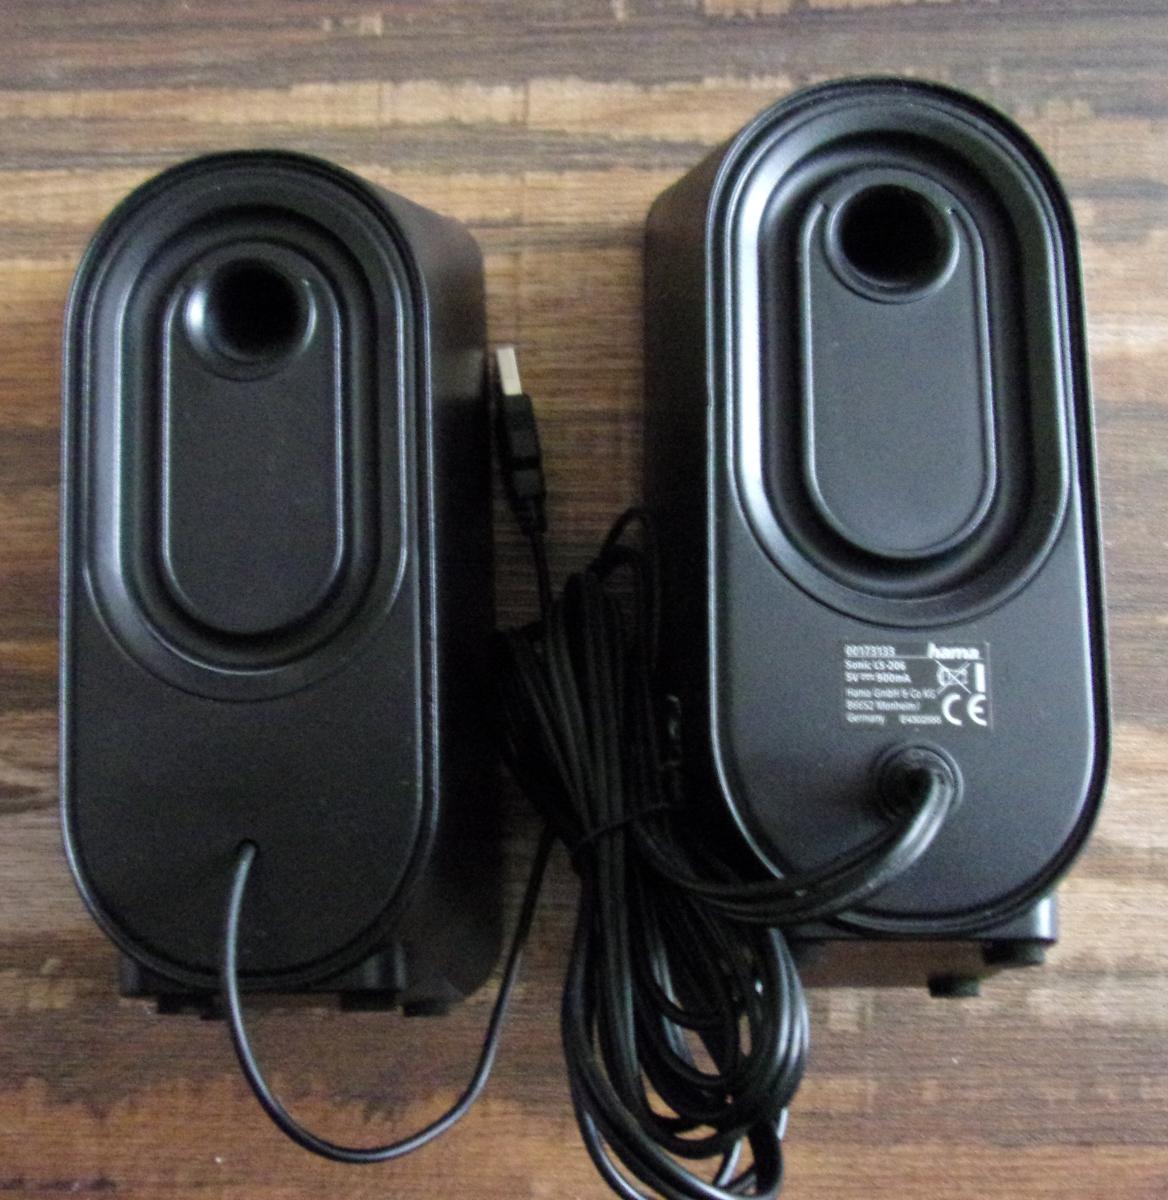 Hama Sonic LS-206 PC Stereo Speakers